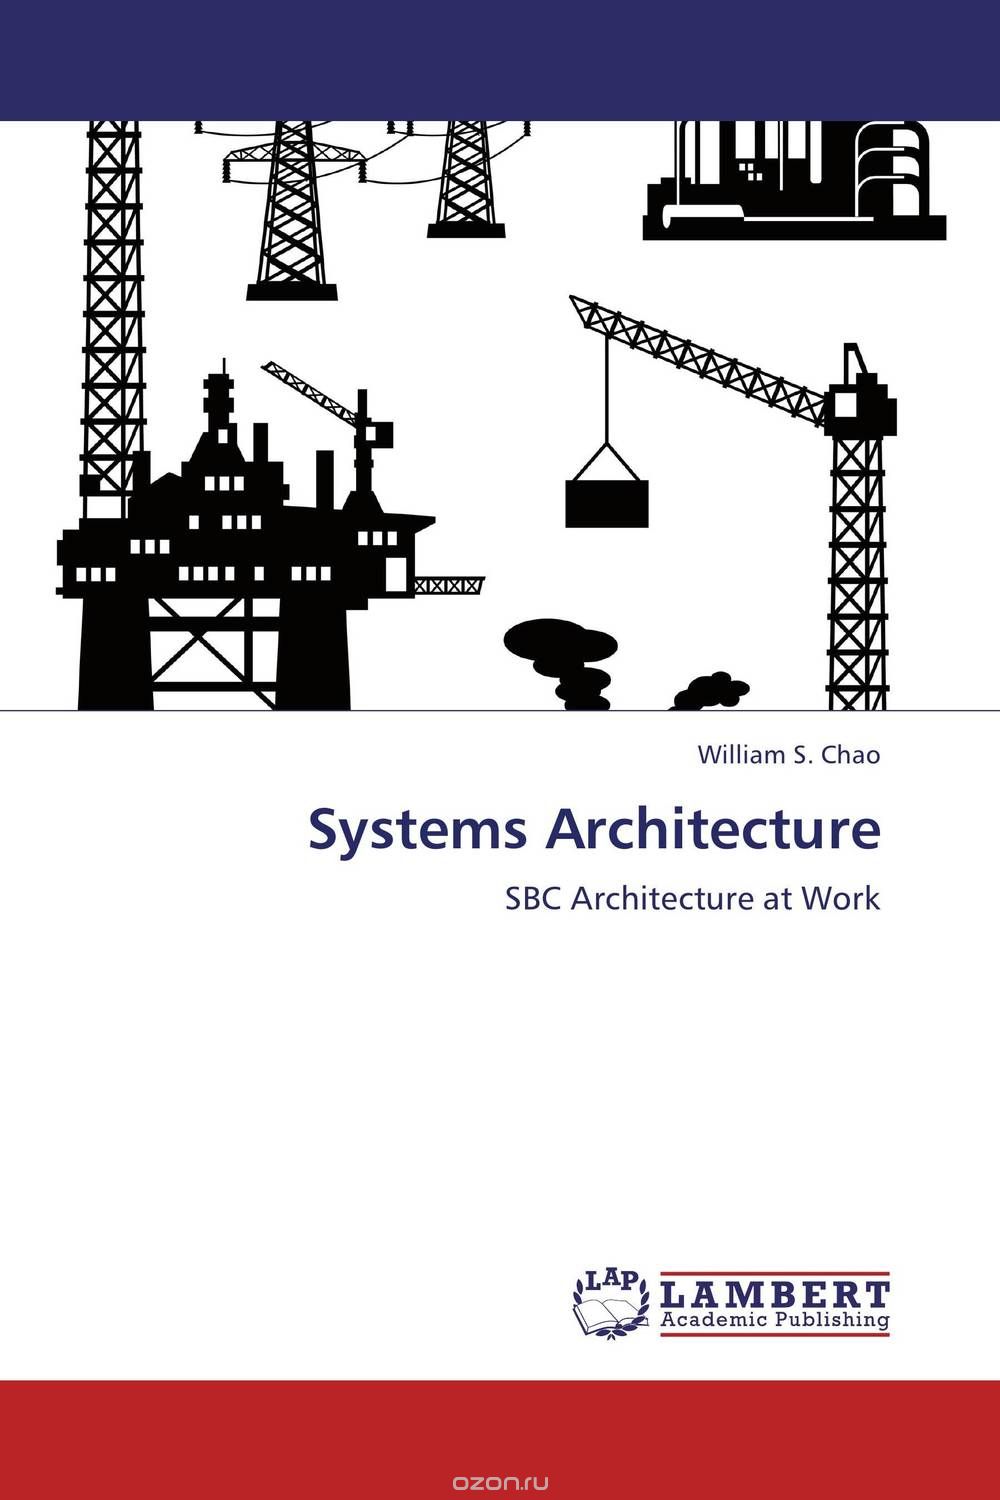 Скачать книгу "Systems Architecture"